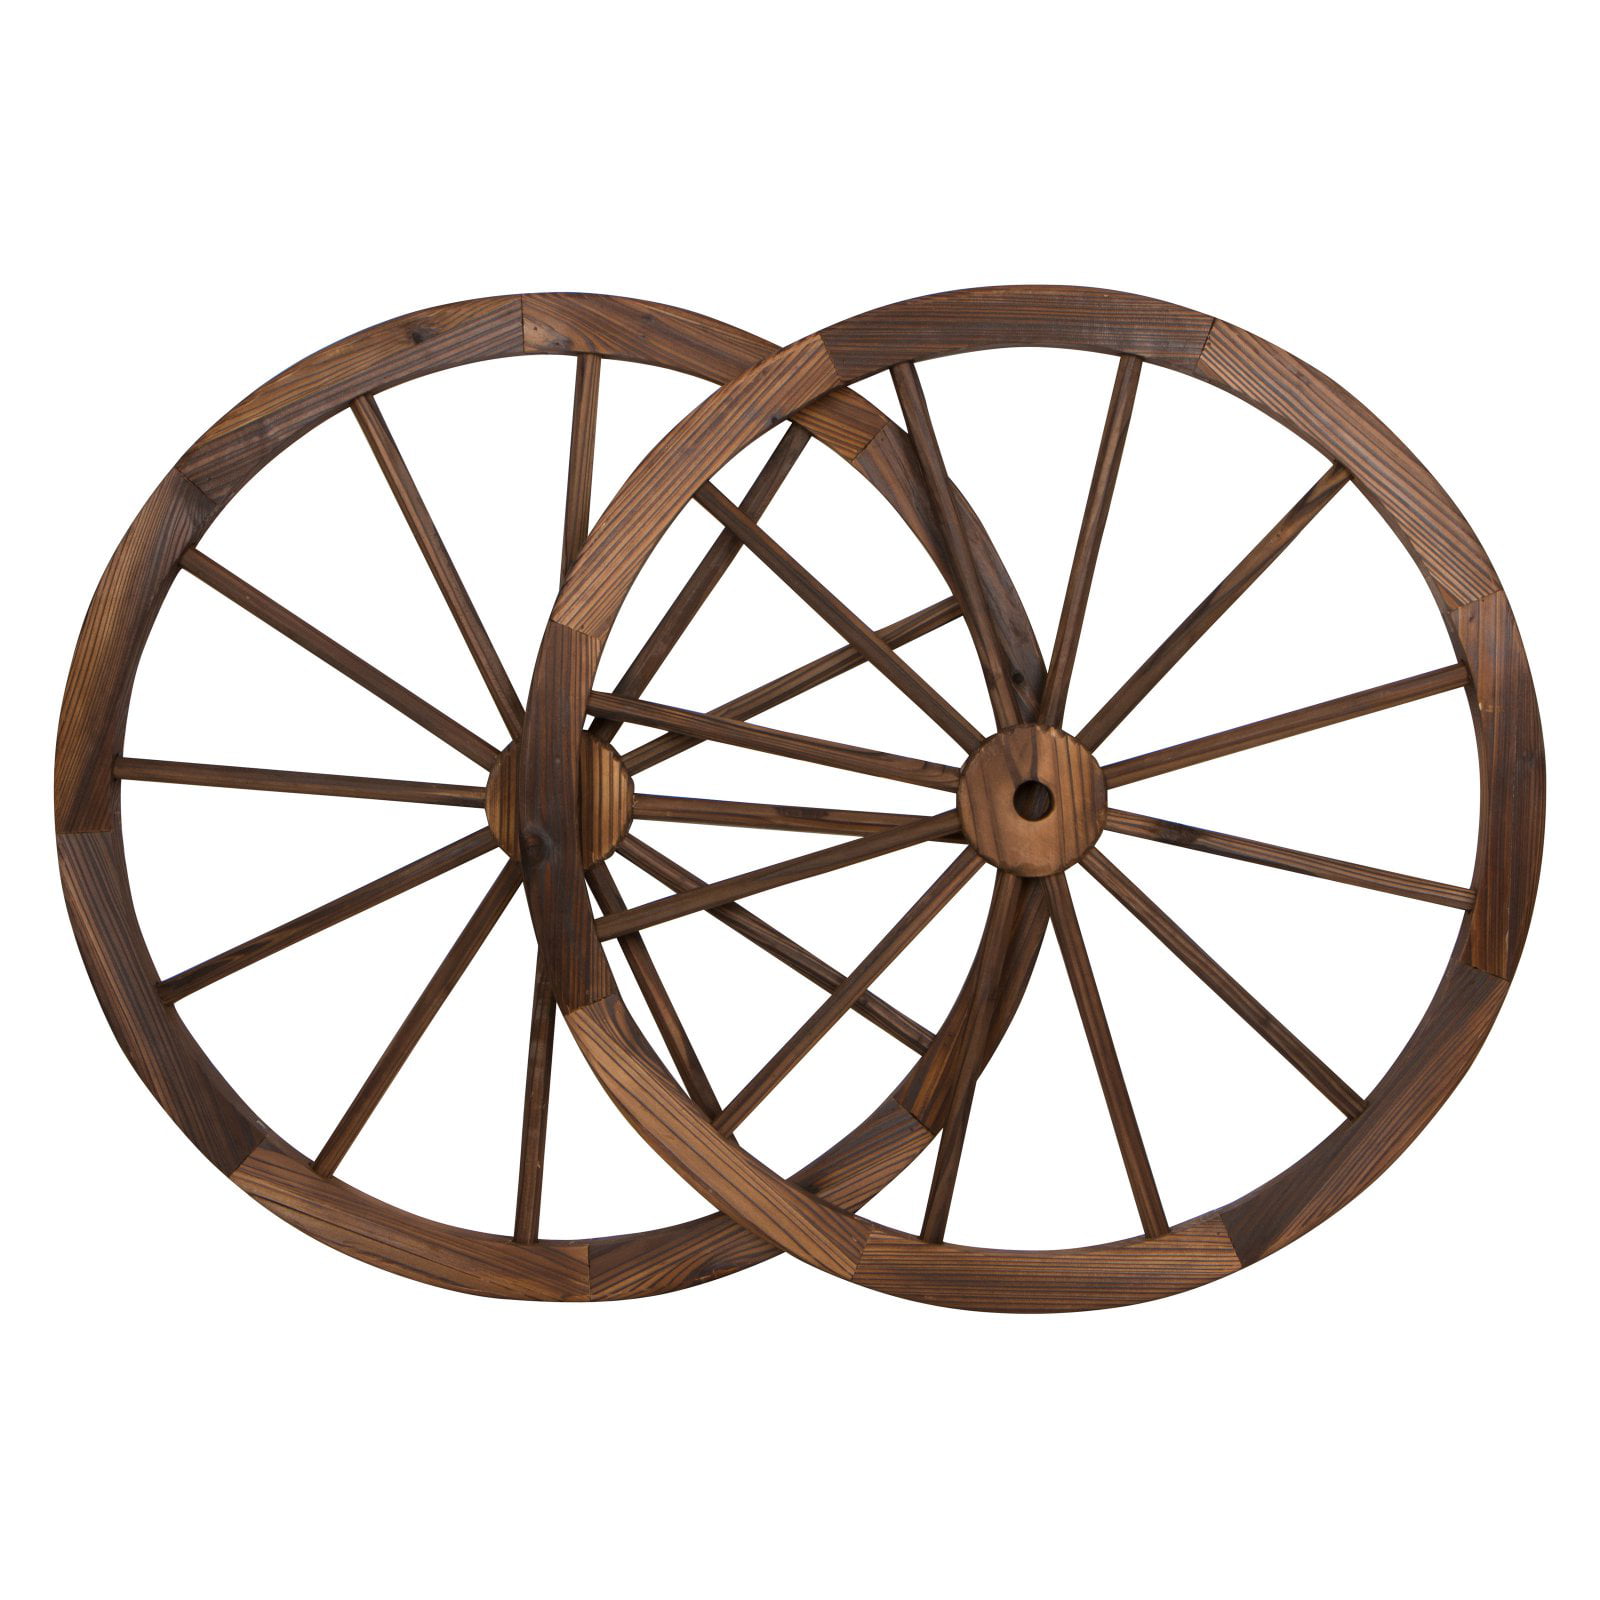 Trademark Innovations Vintage Wood Decorative Garden Wagon Wheel with Steel Rim-31.5 Diameter 2 Count Set of 2 